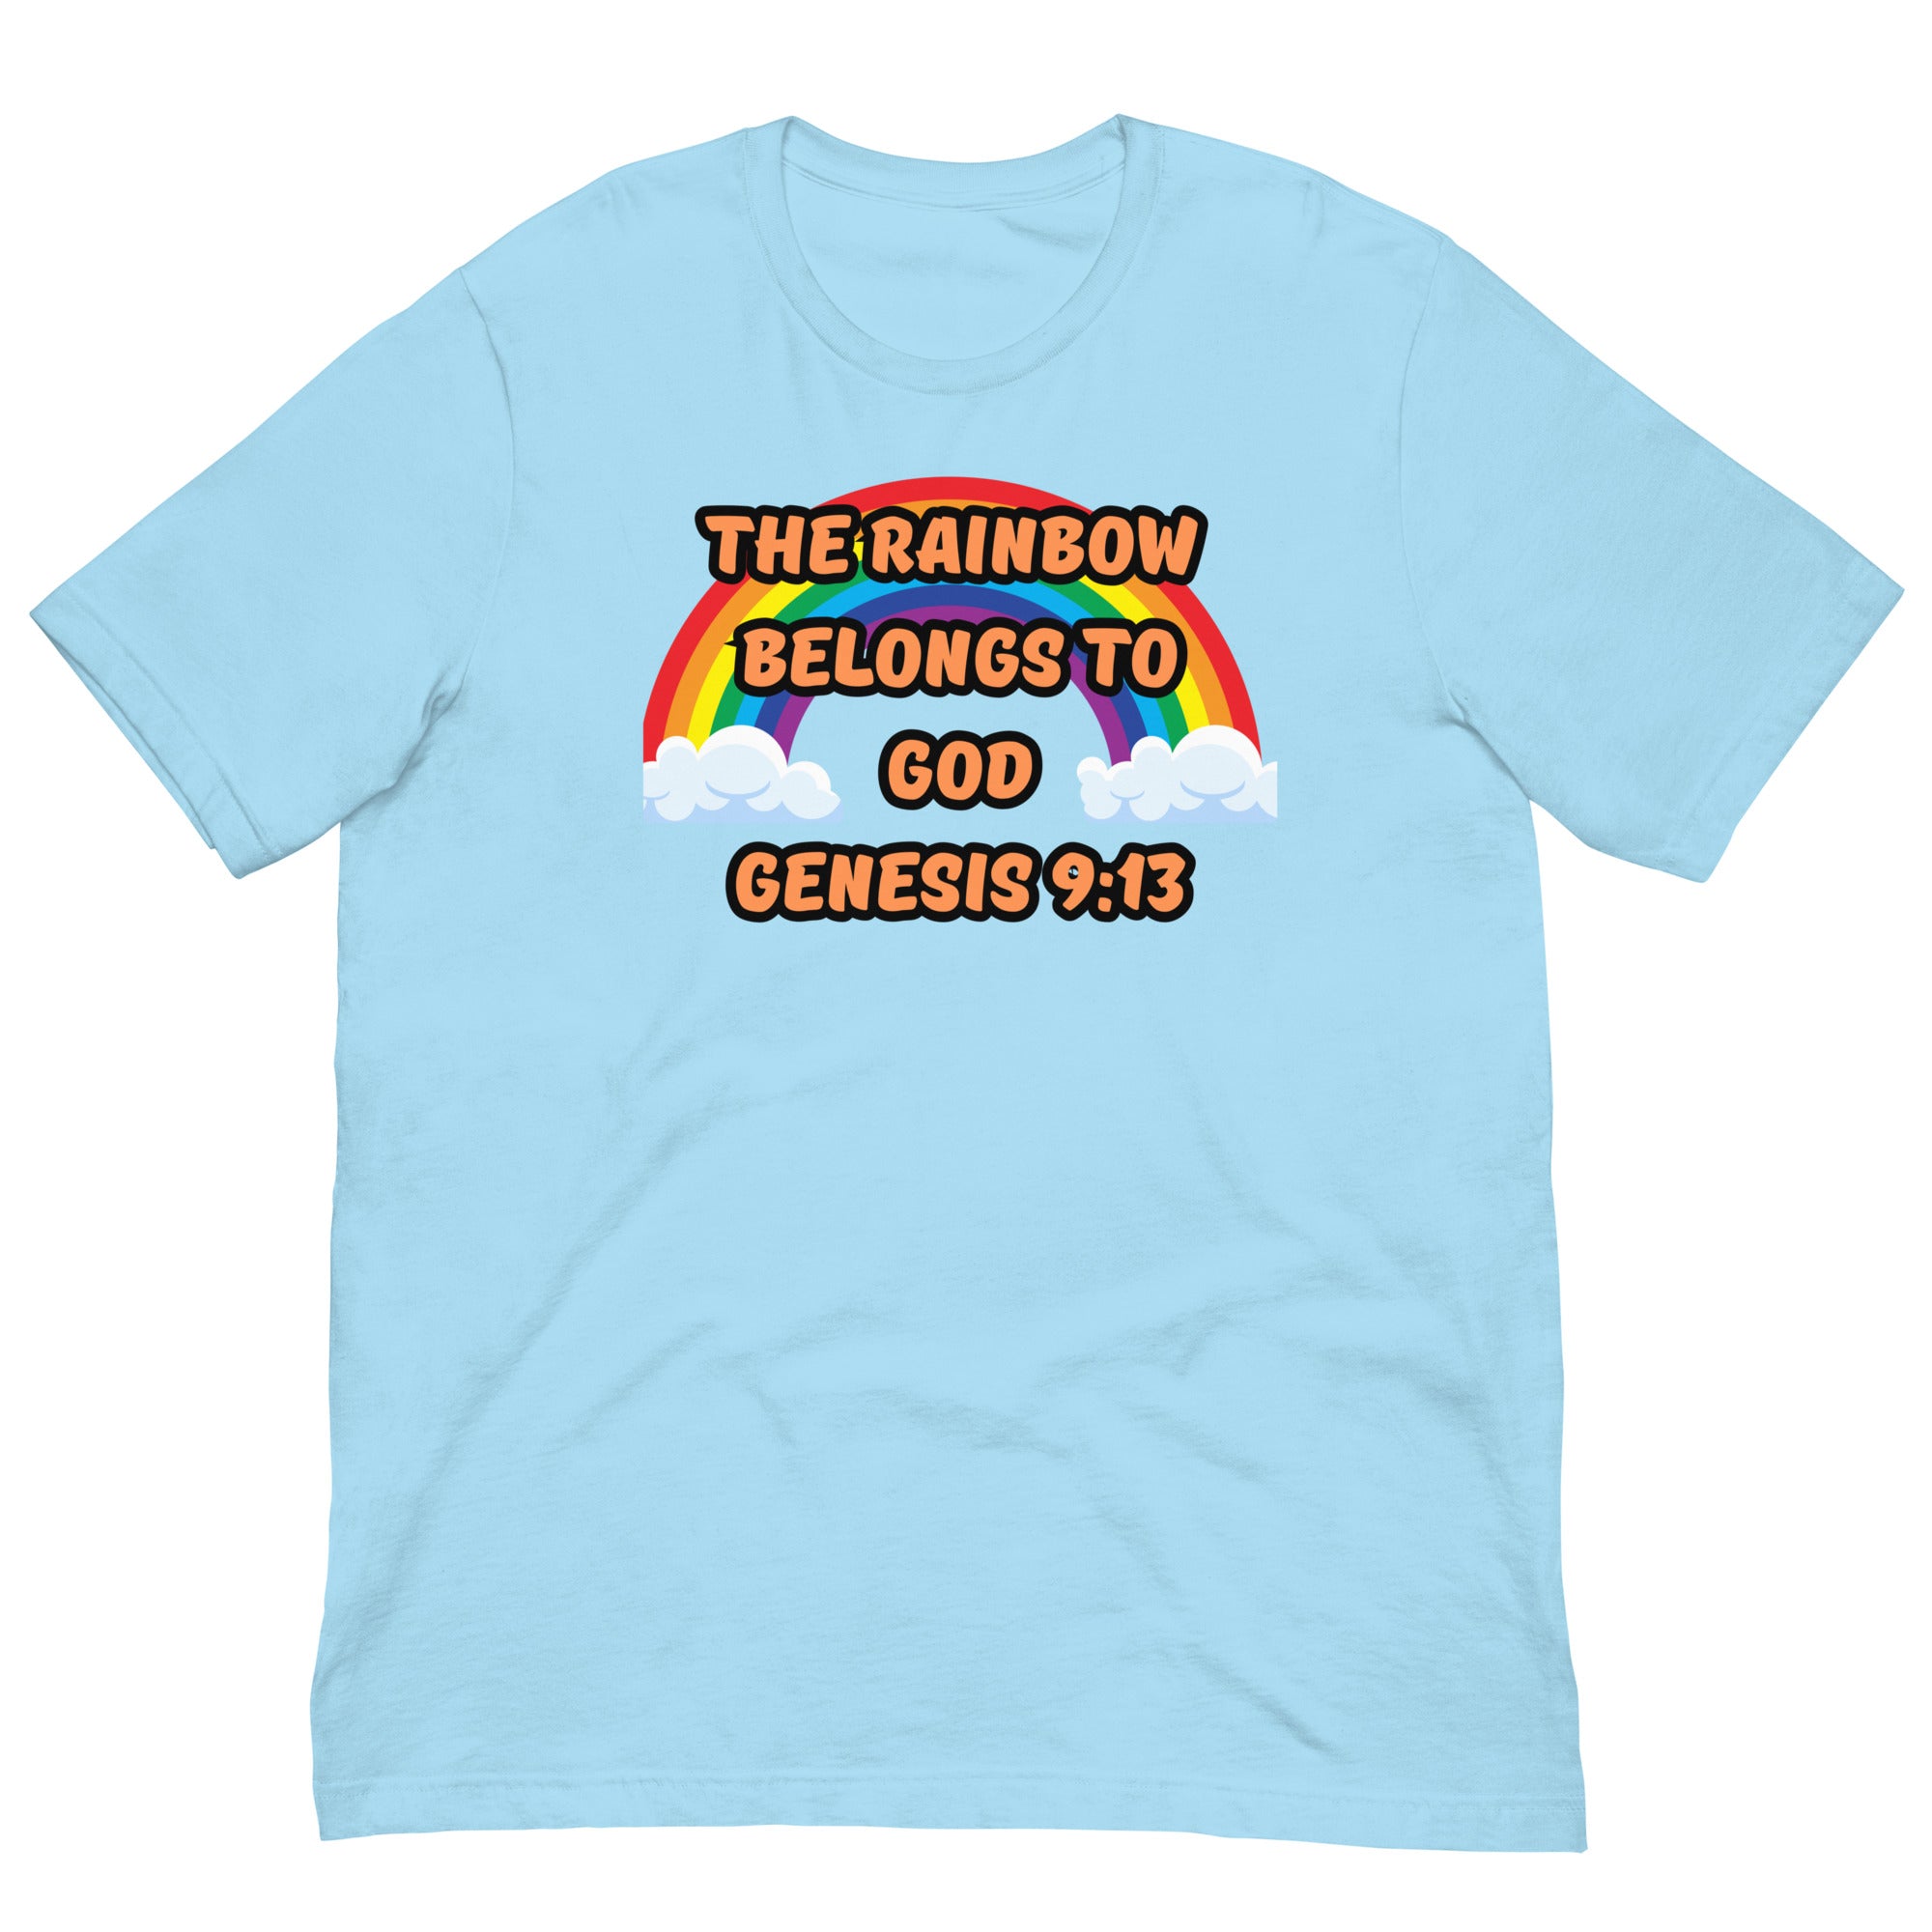 Genesis 9:13 Unisex t-shirt